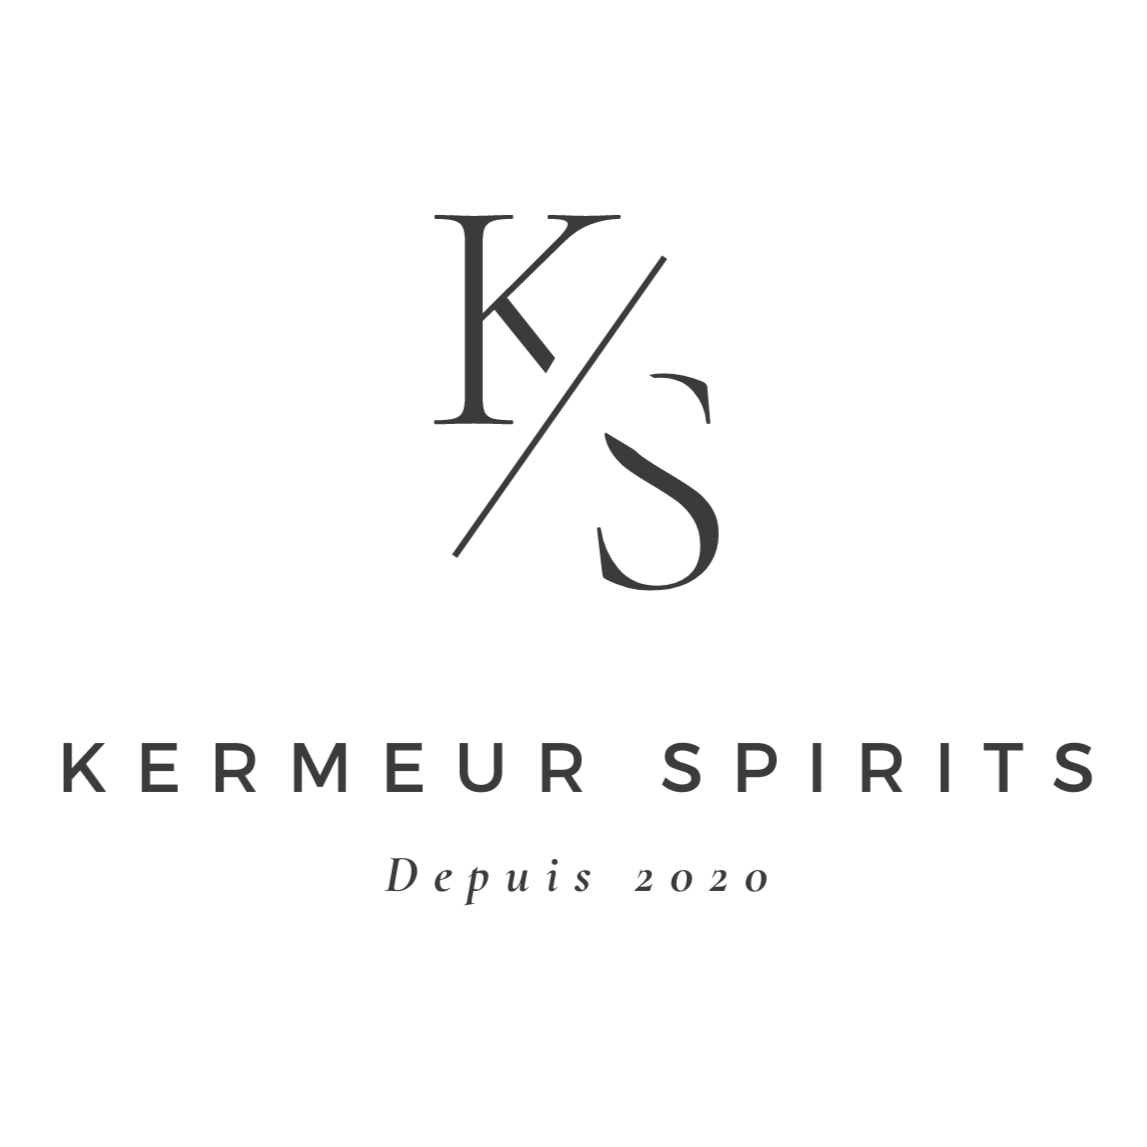 Kermeur spirits